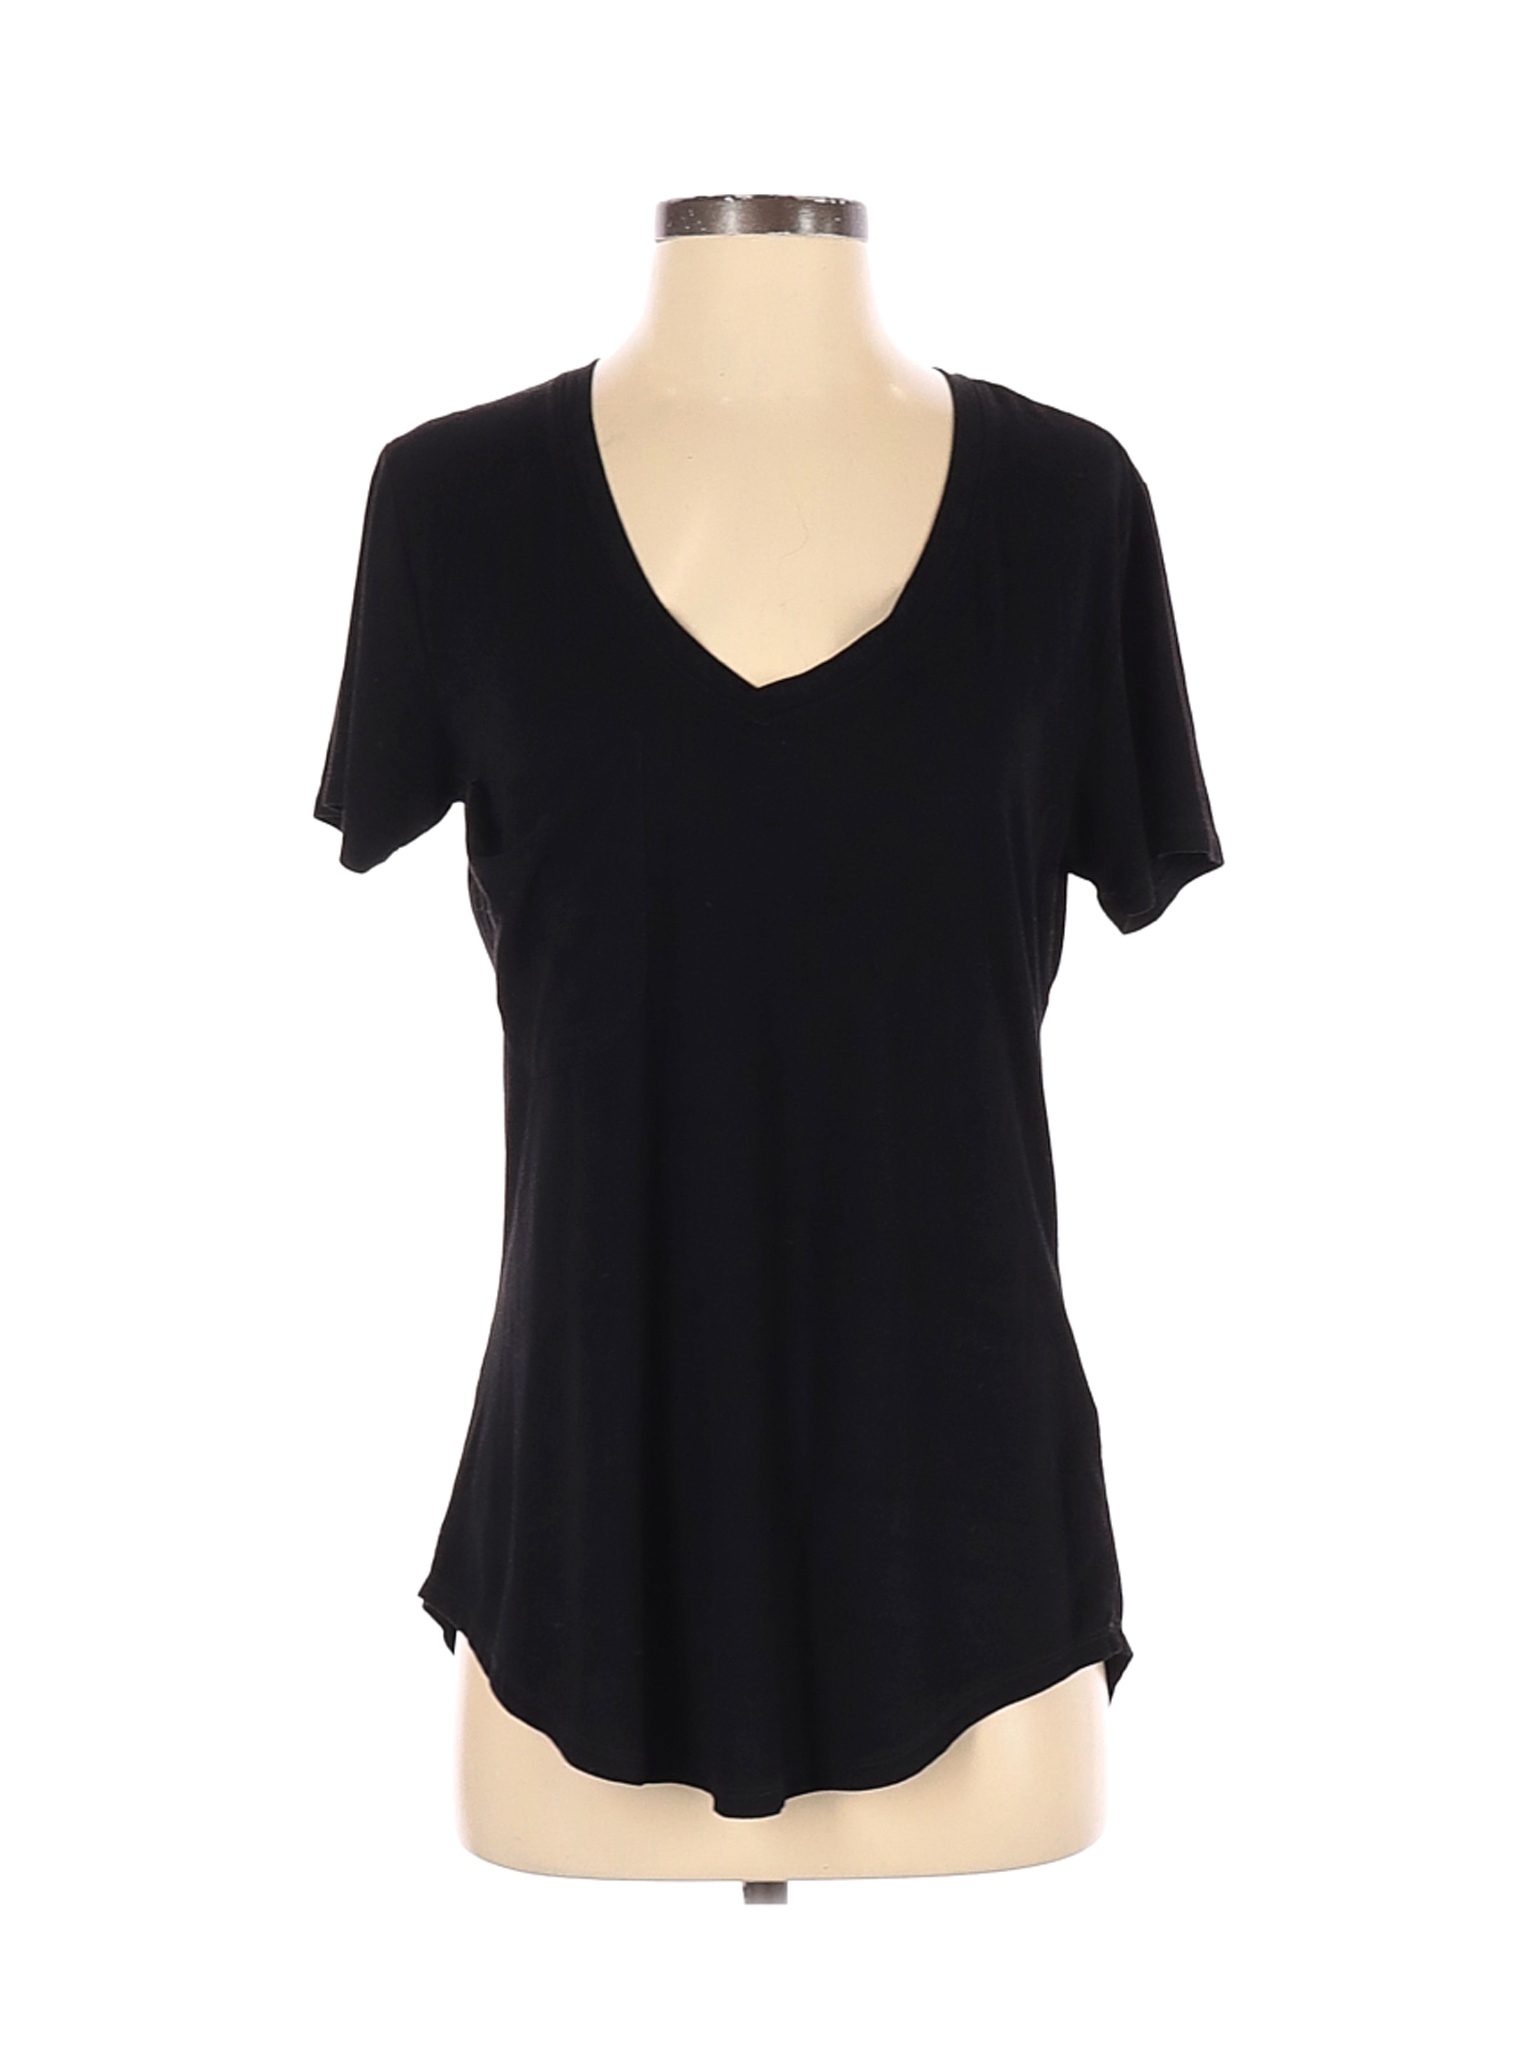 Z Supply Solid Black Short Sleeve T-Shirt Size S - 60% off | thredUP